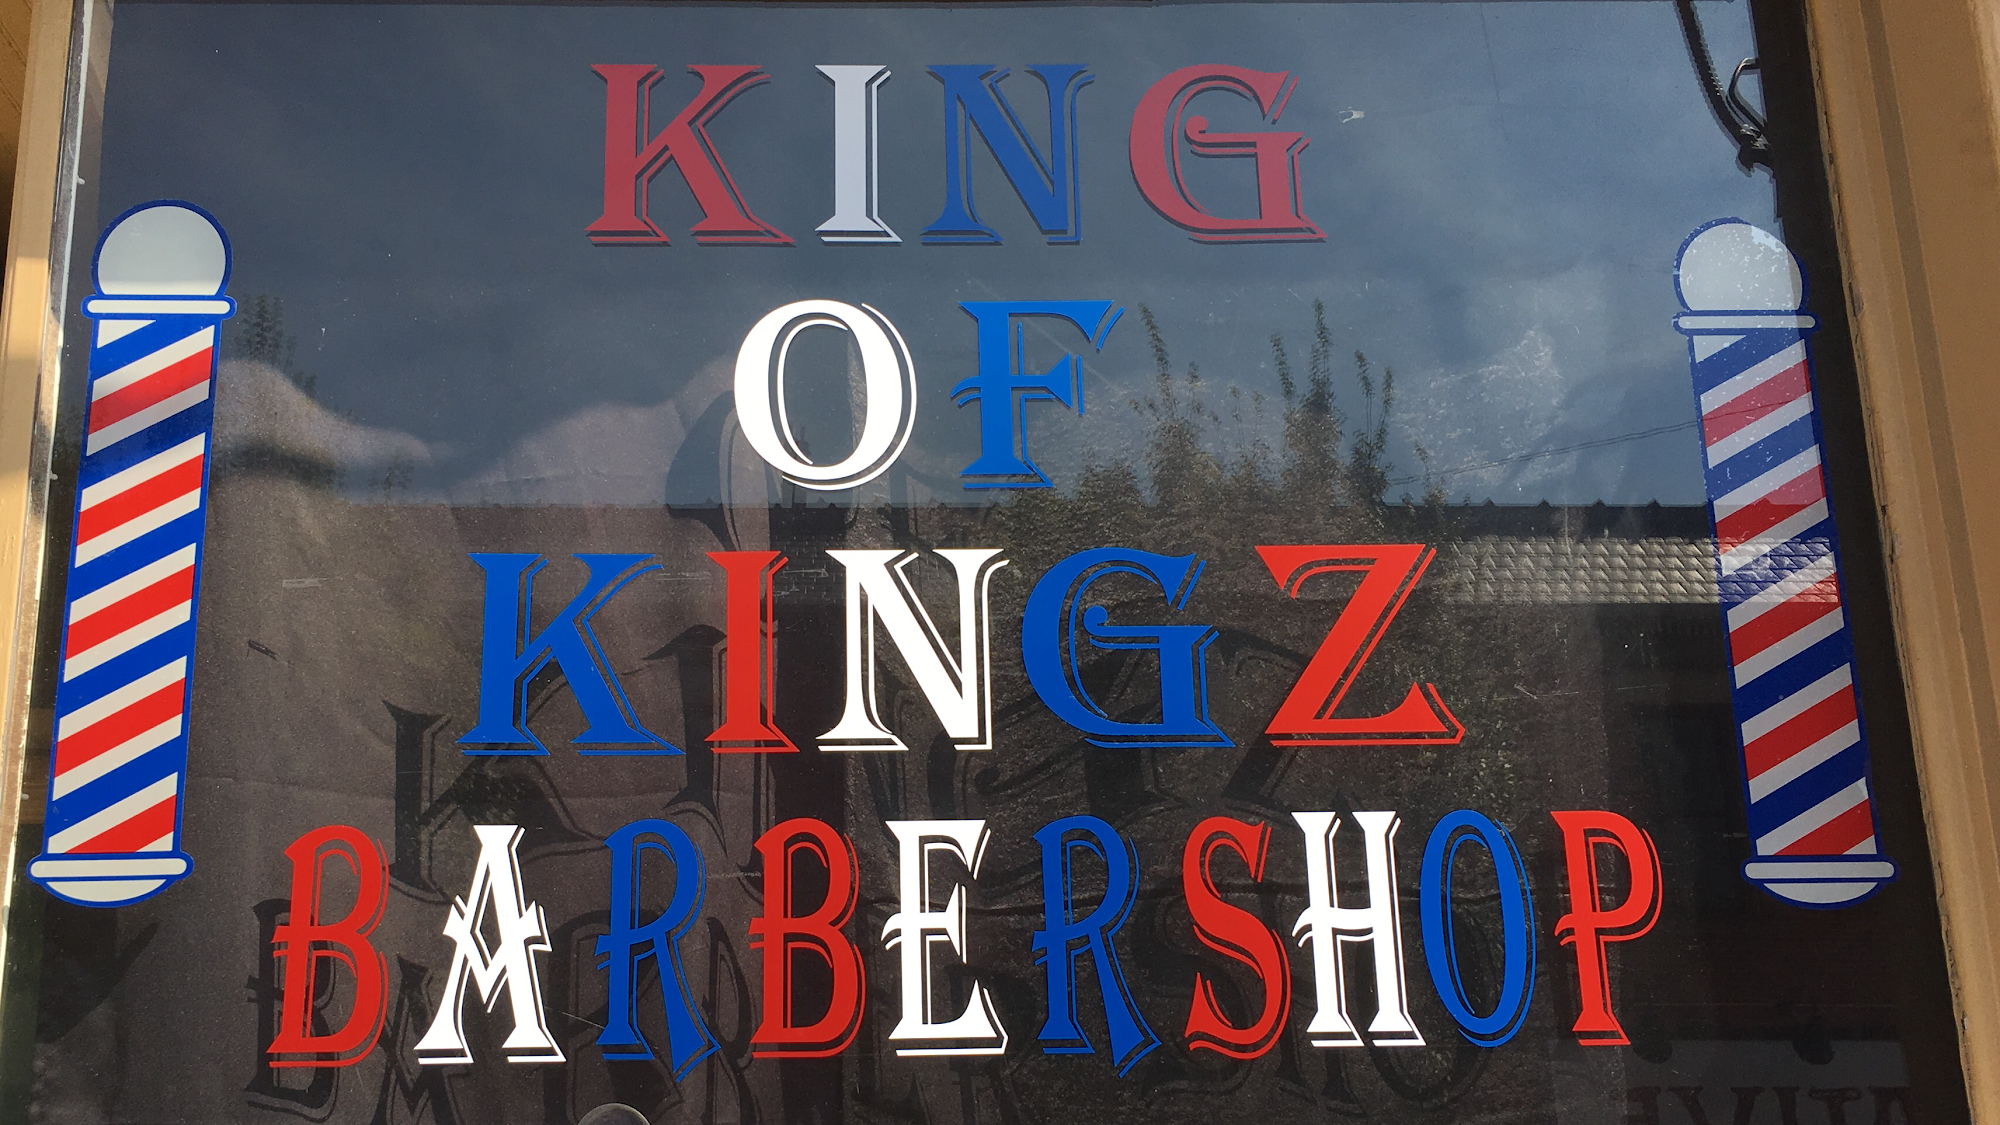 King of Kingz barbershop